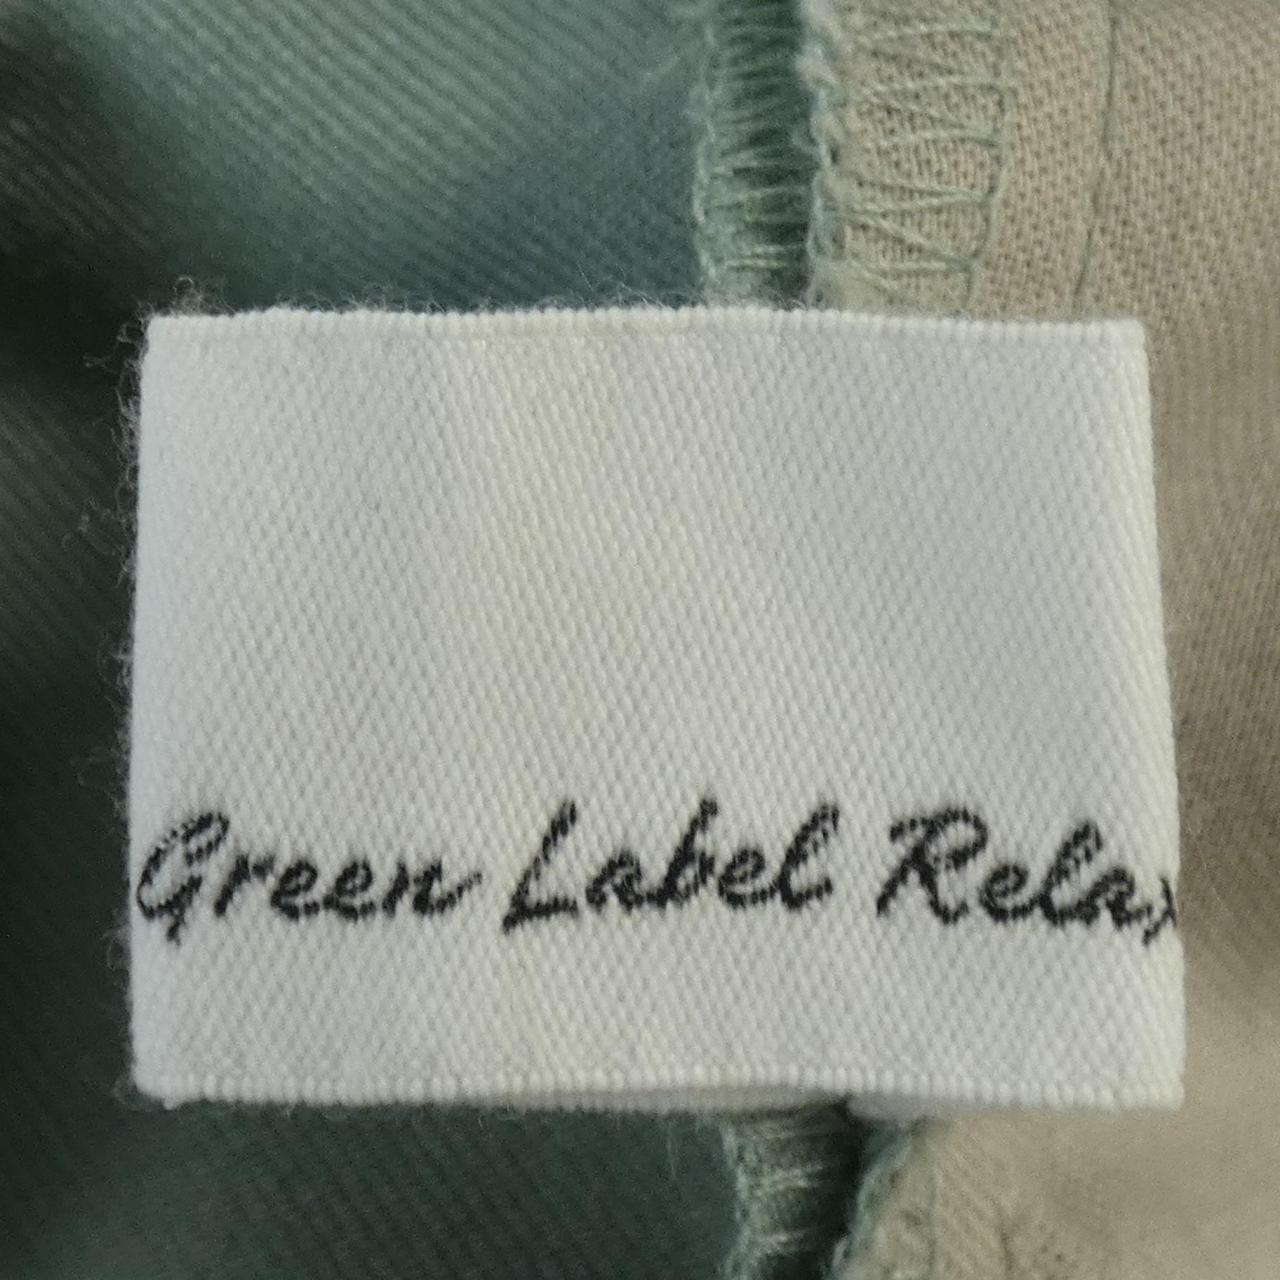 绿色标签放松green label relaxing裤